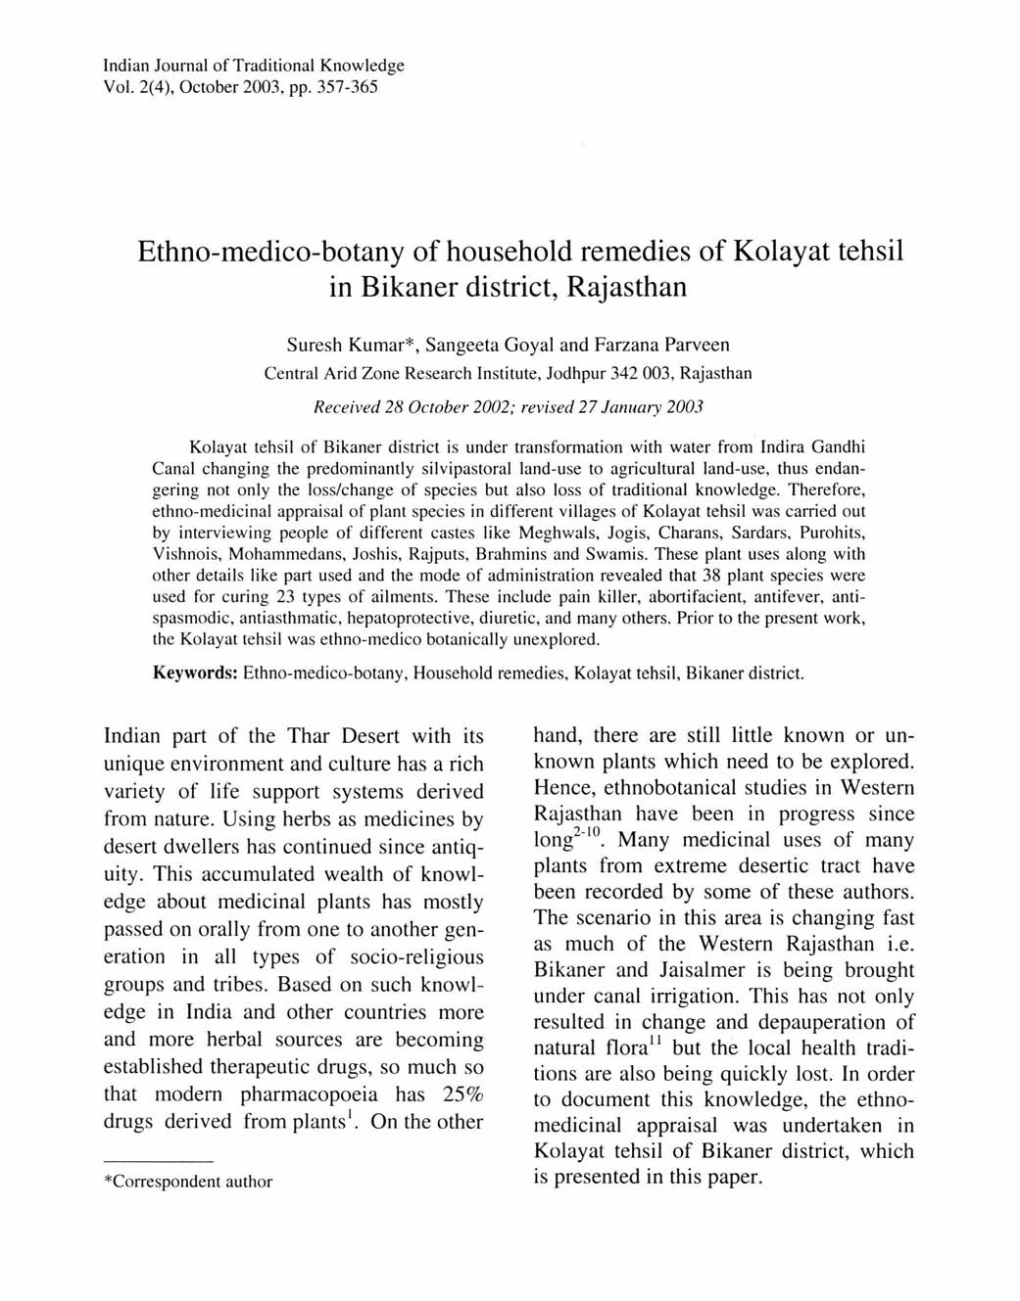 Ethno-Medico-Botany of Household Remedies of Kolayat Tehsil in Bikaner District, Rajasthan